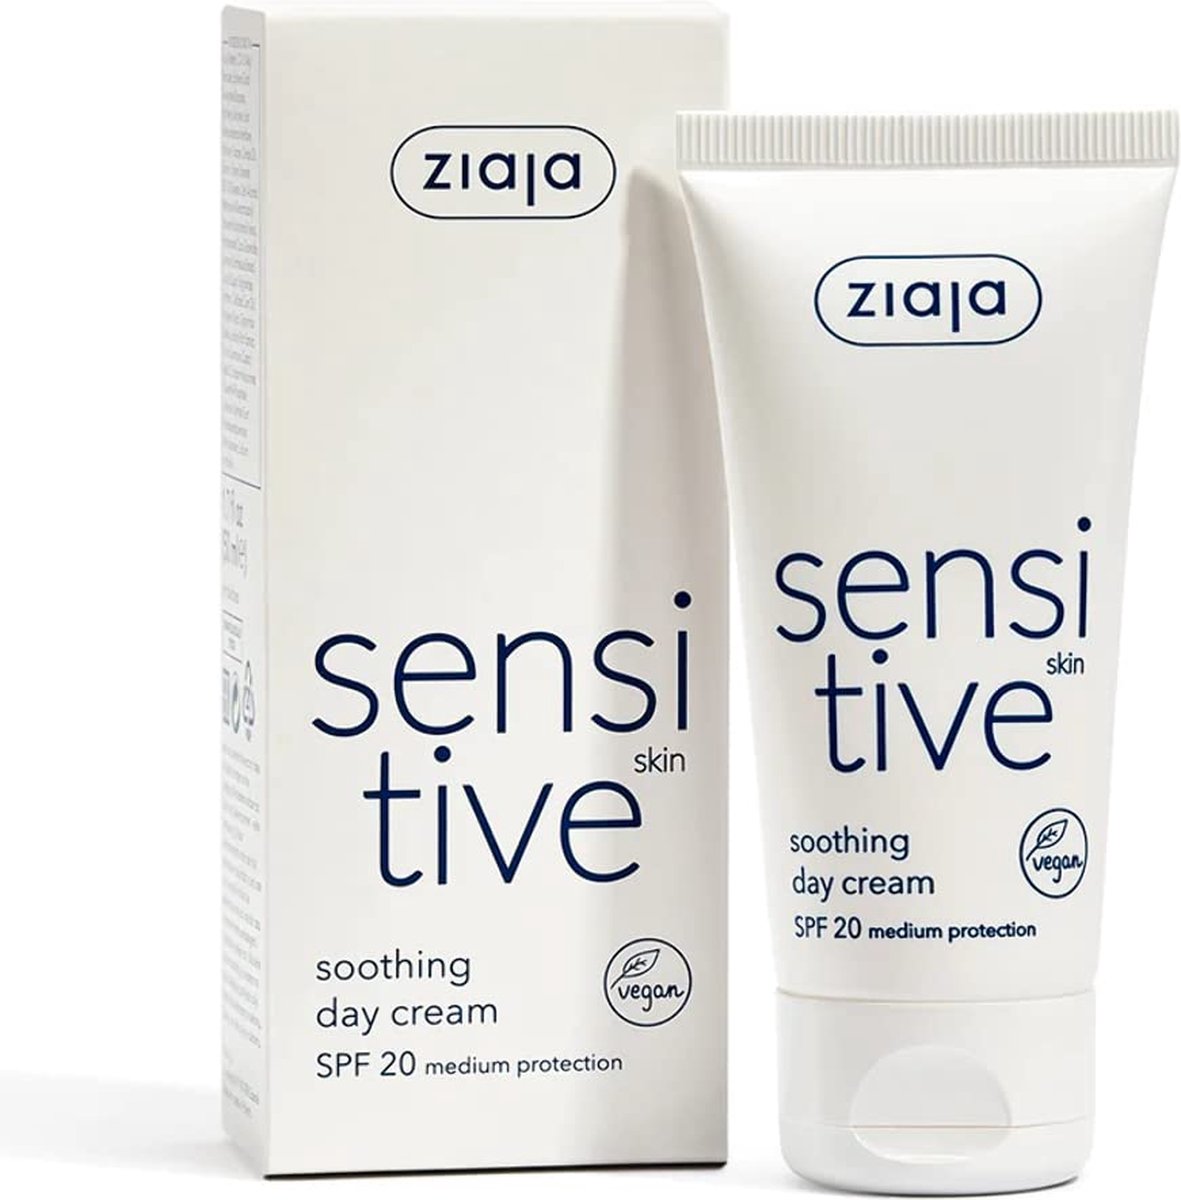 Ziaja - Soothing Day Cream SPF 20 Sensitiv e 50 ml - 50ml